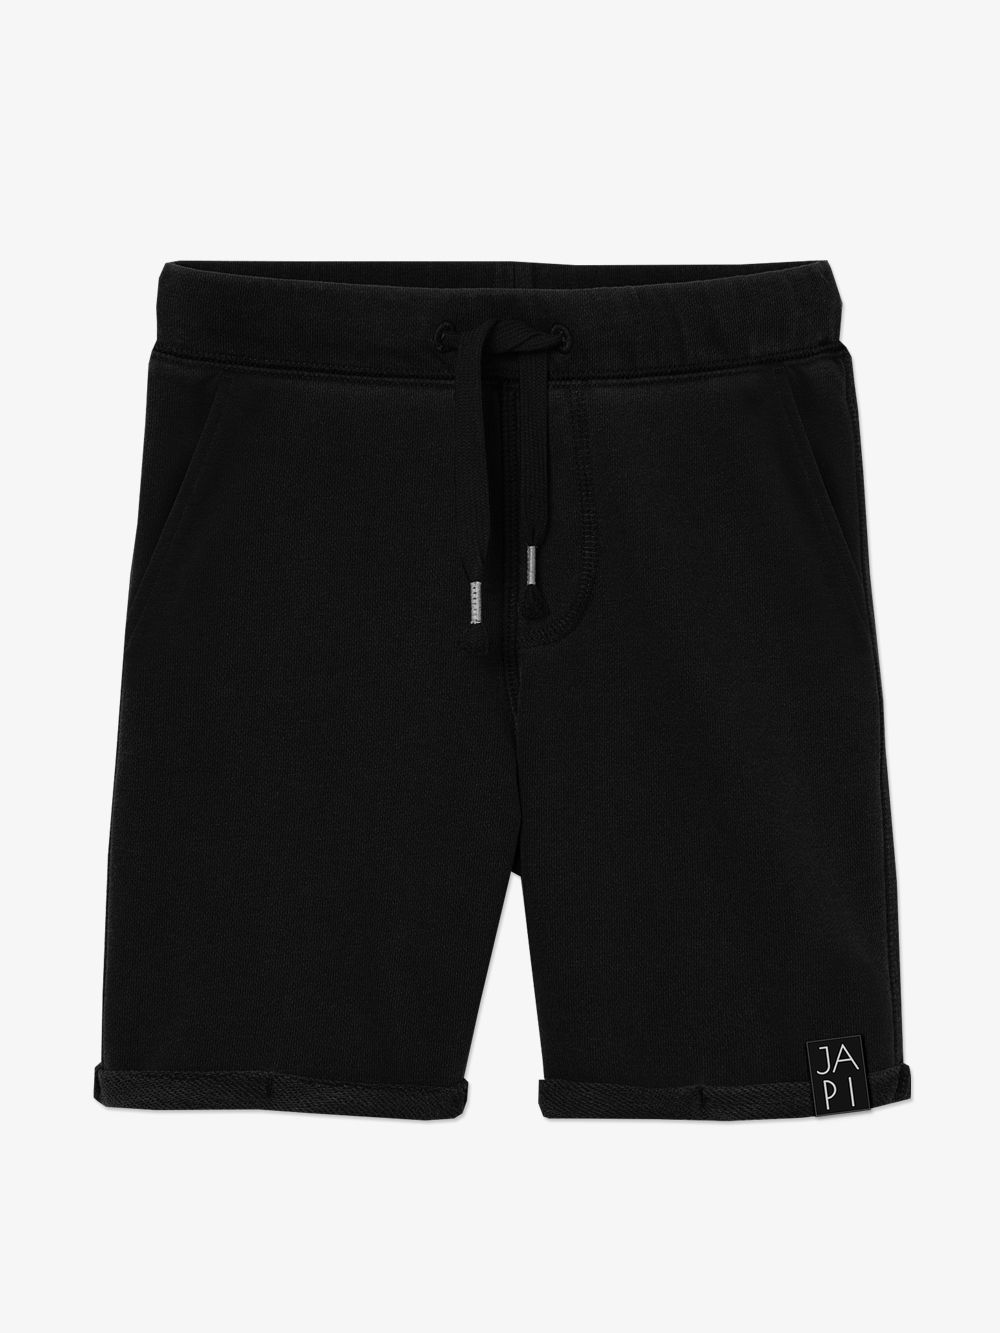 Herren-Shorts CHARCOAL